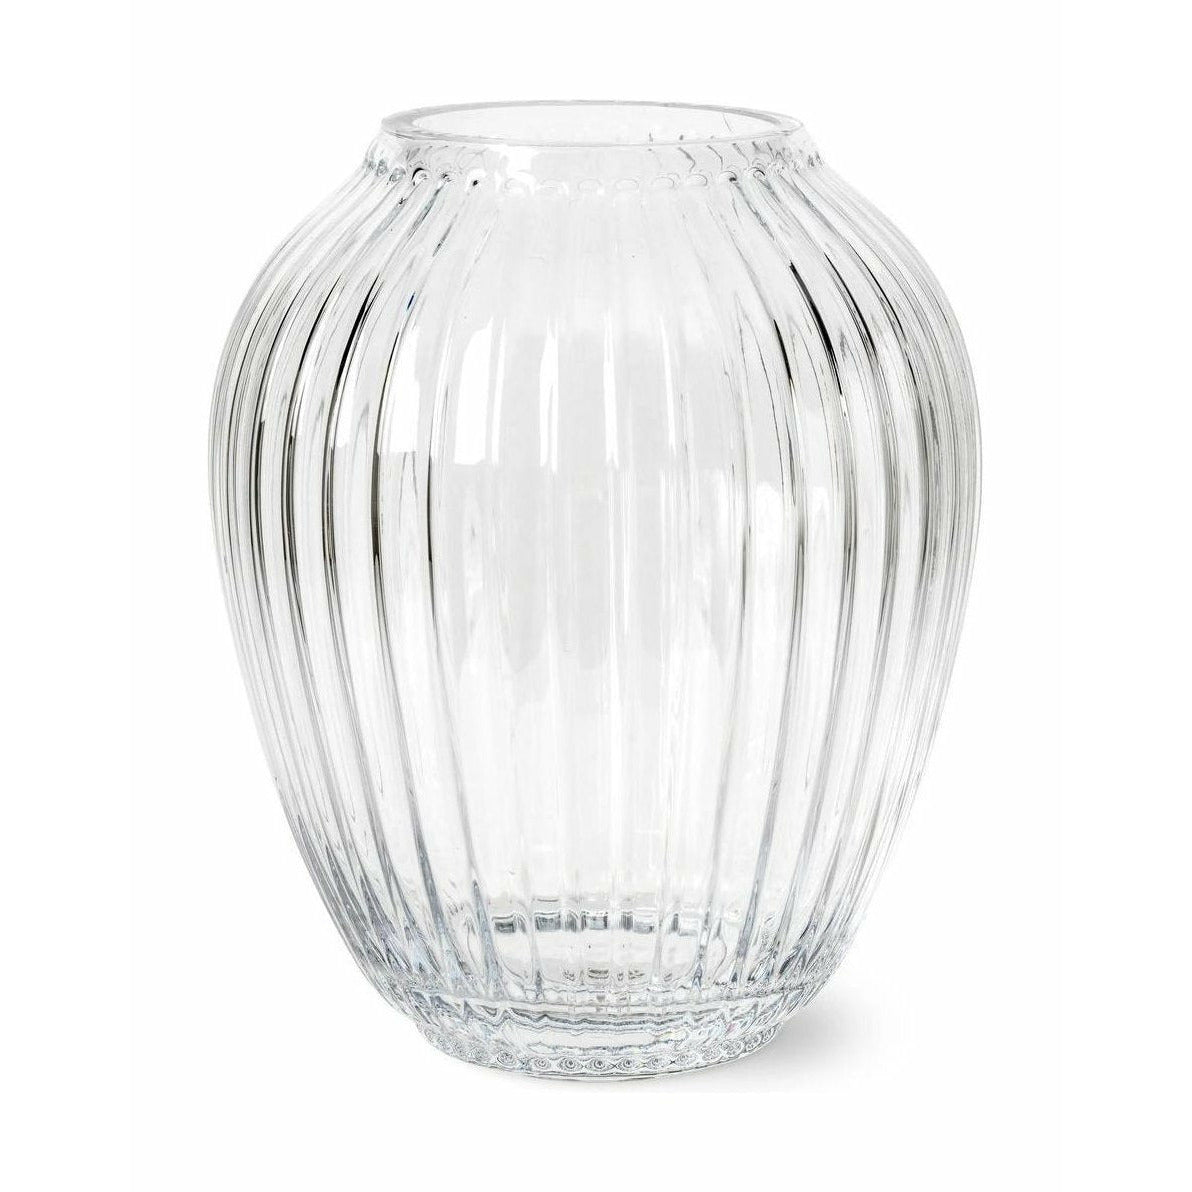 Kähler Hammershøi vase 18,5 cm, klar